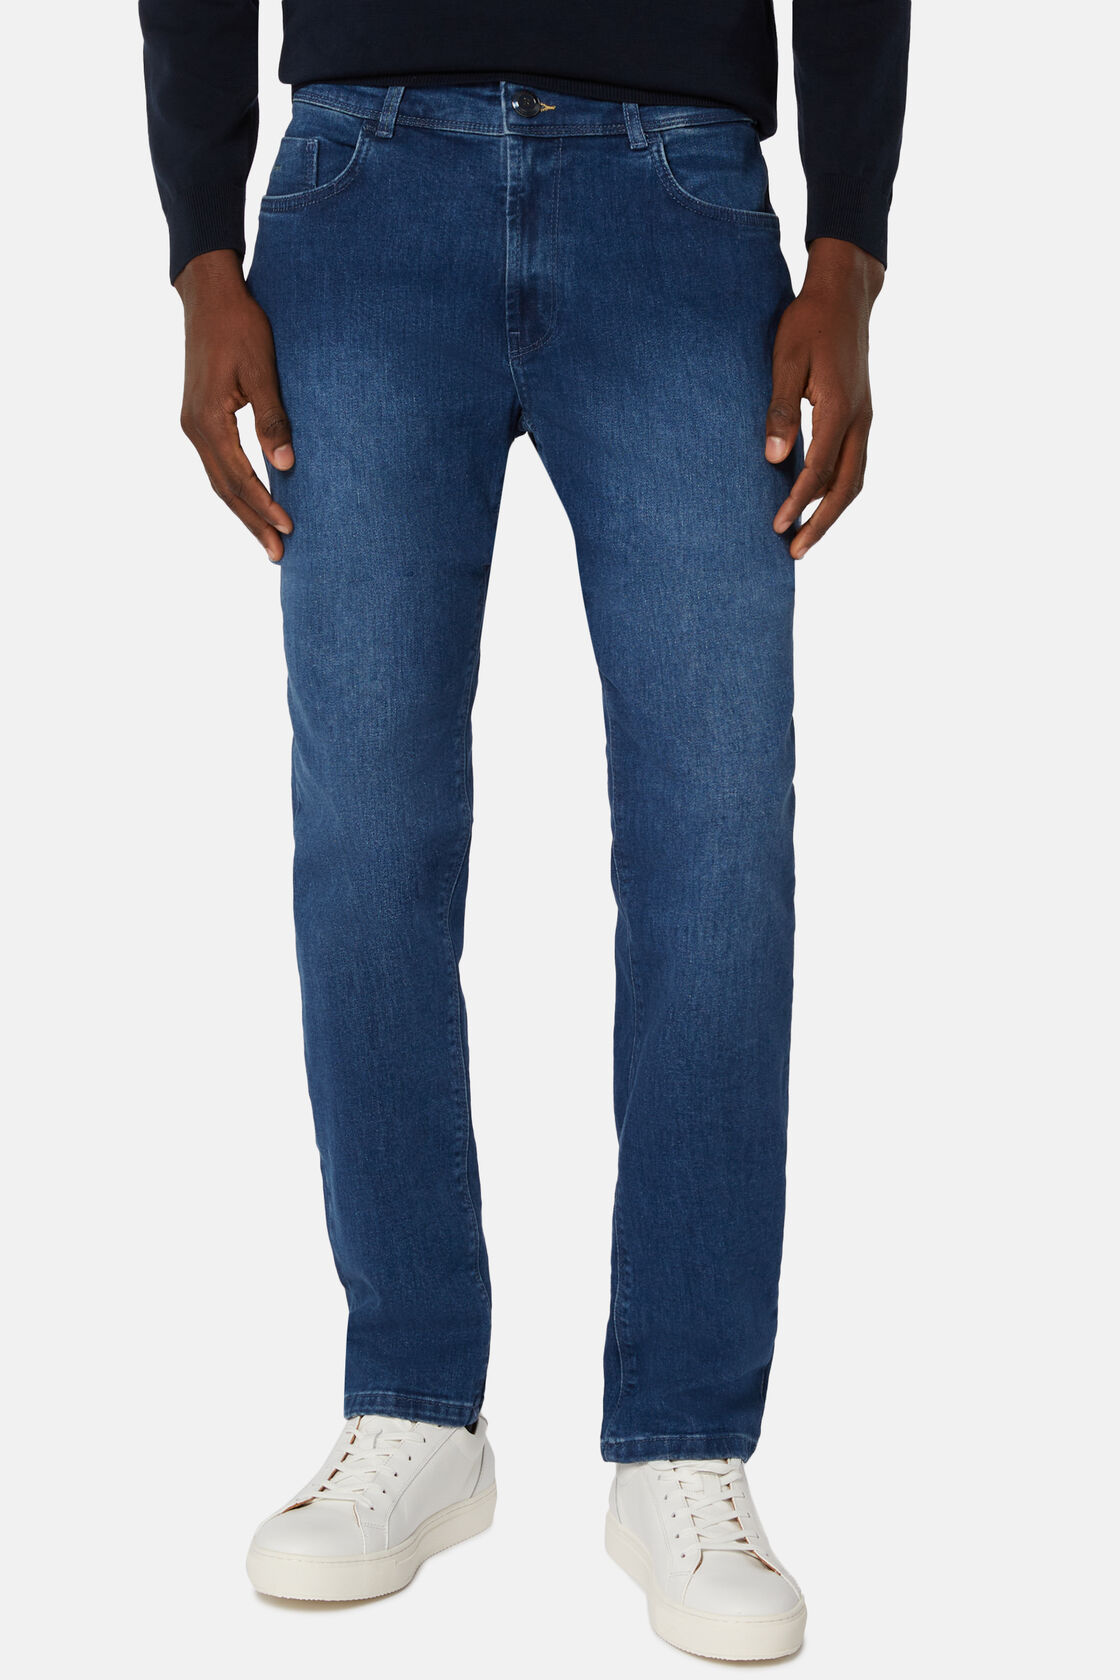 Medium Blue Stretch Denim Jeans, Indigo, hi-res